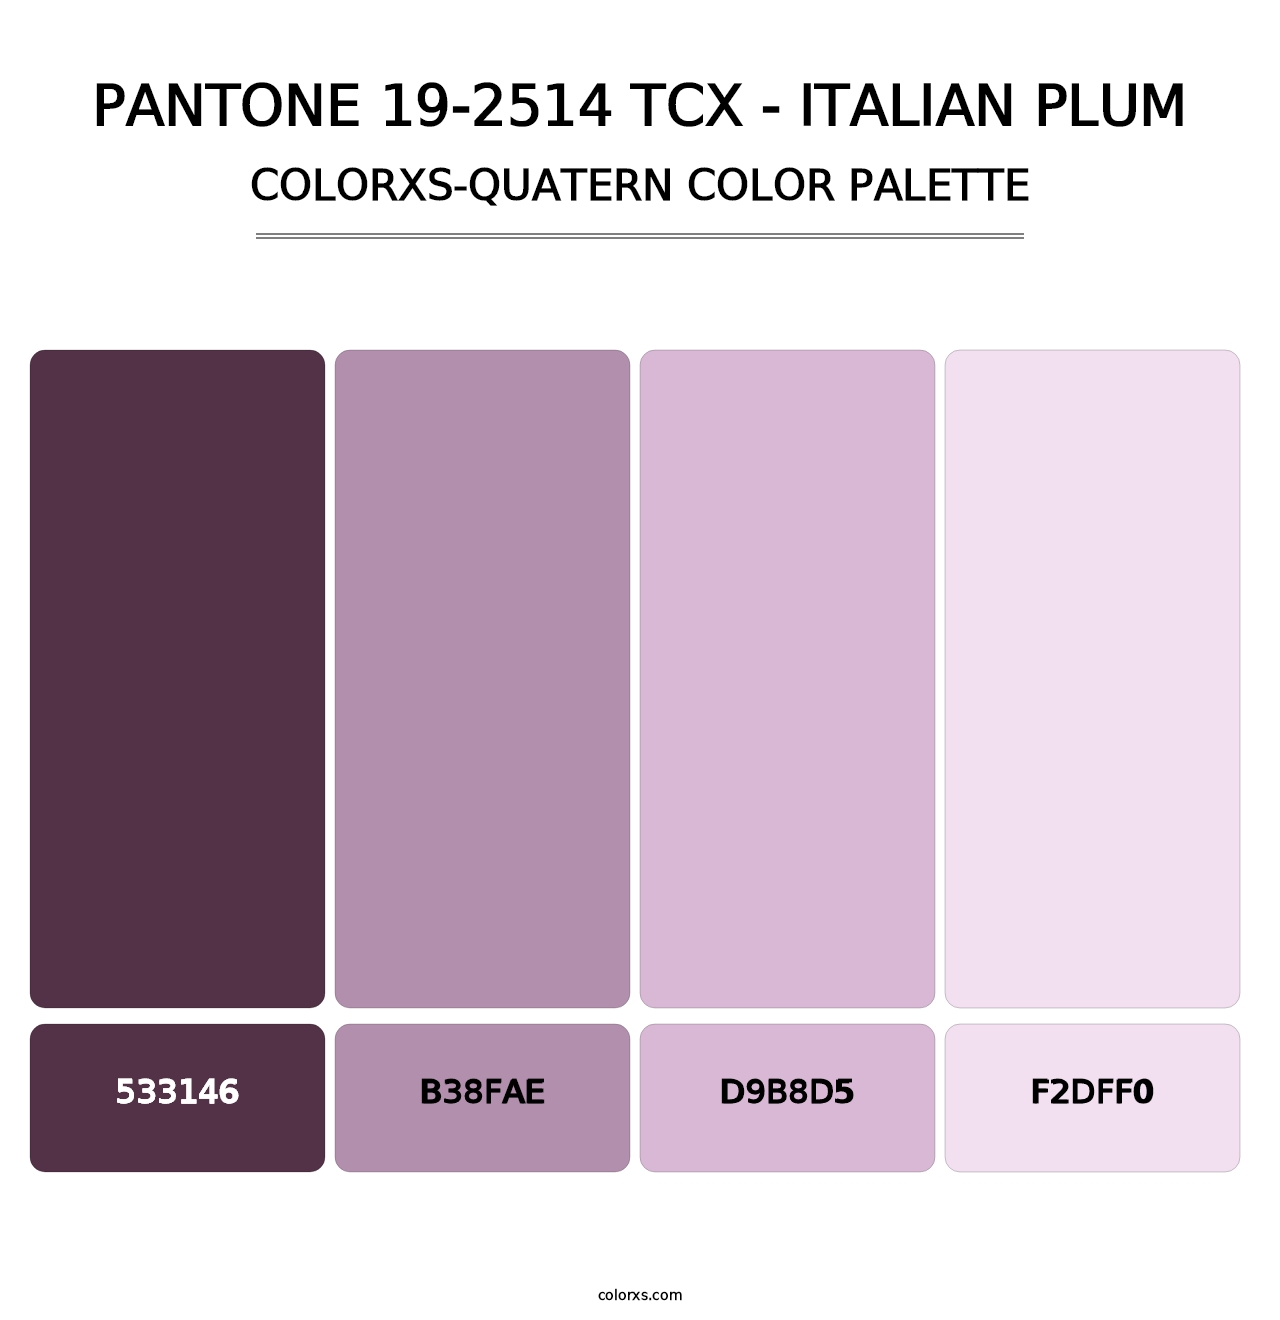 PANTONE 19-2514 TCX - Italian Plum - Colorxs Quatern Palette